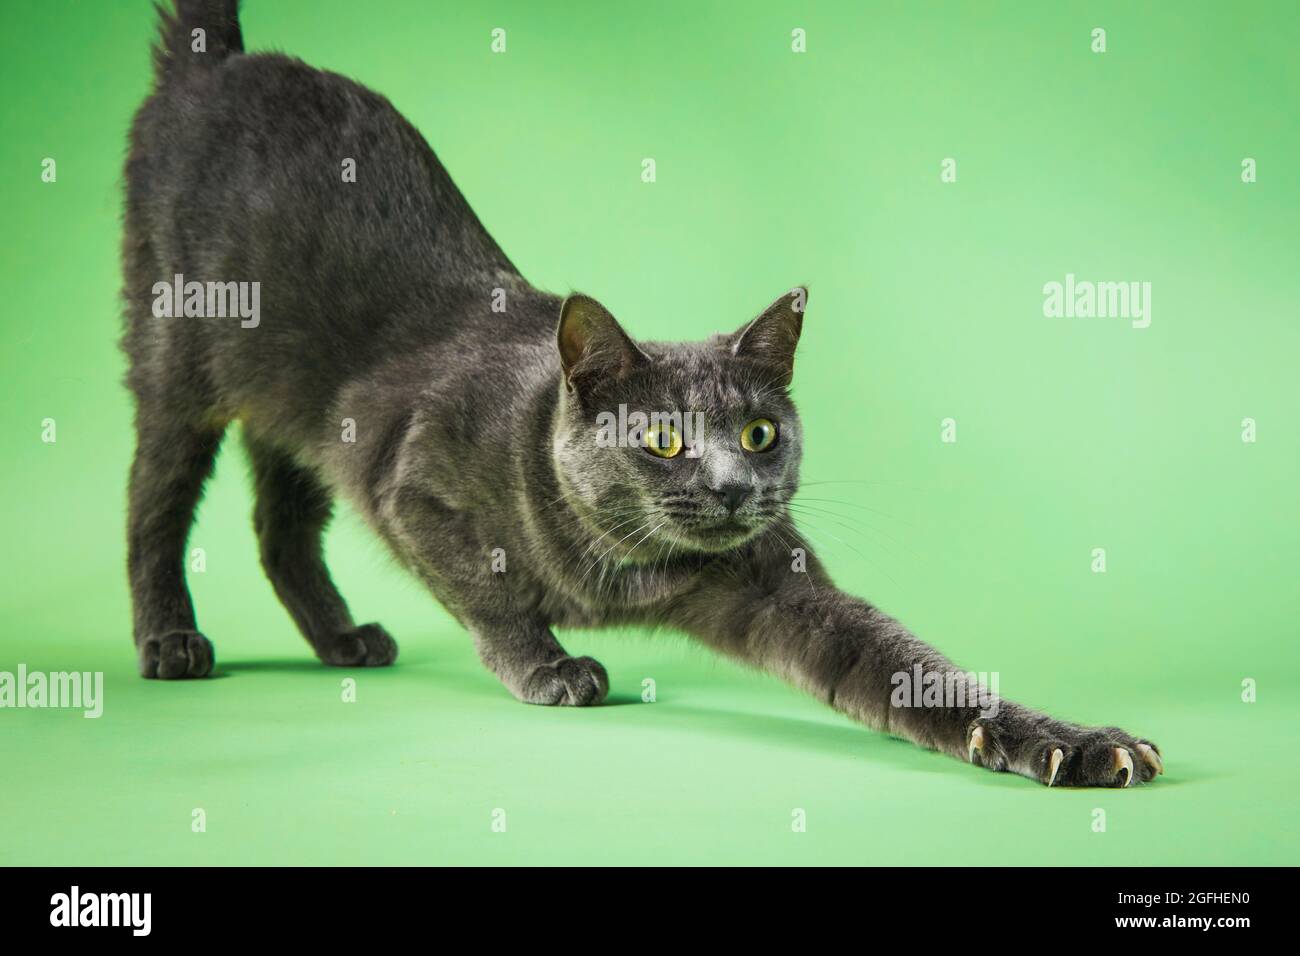 Un gato gris joven que se estira con garras en un fondo de estudio, Foto de stock